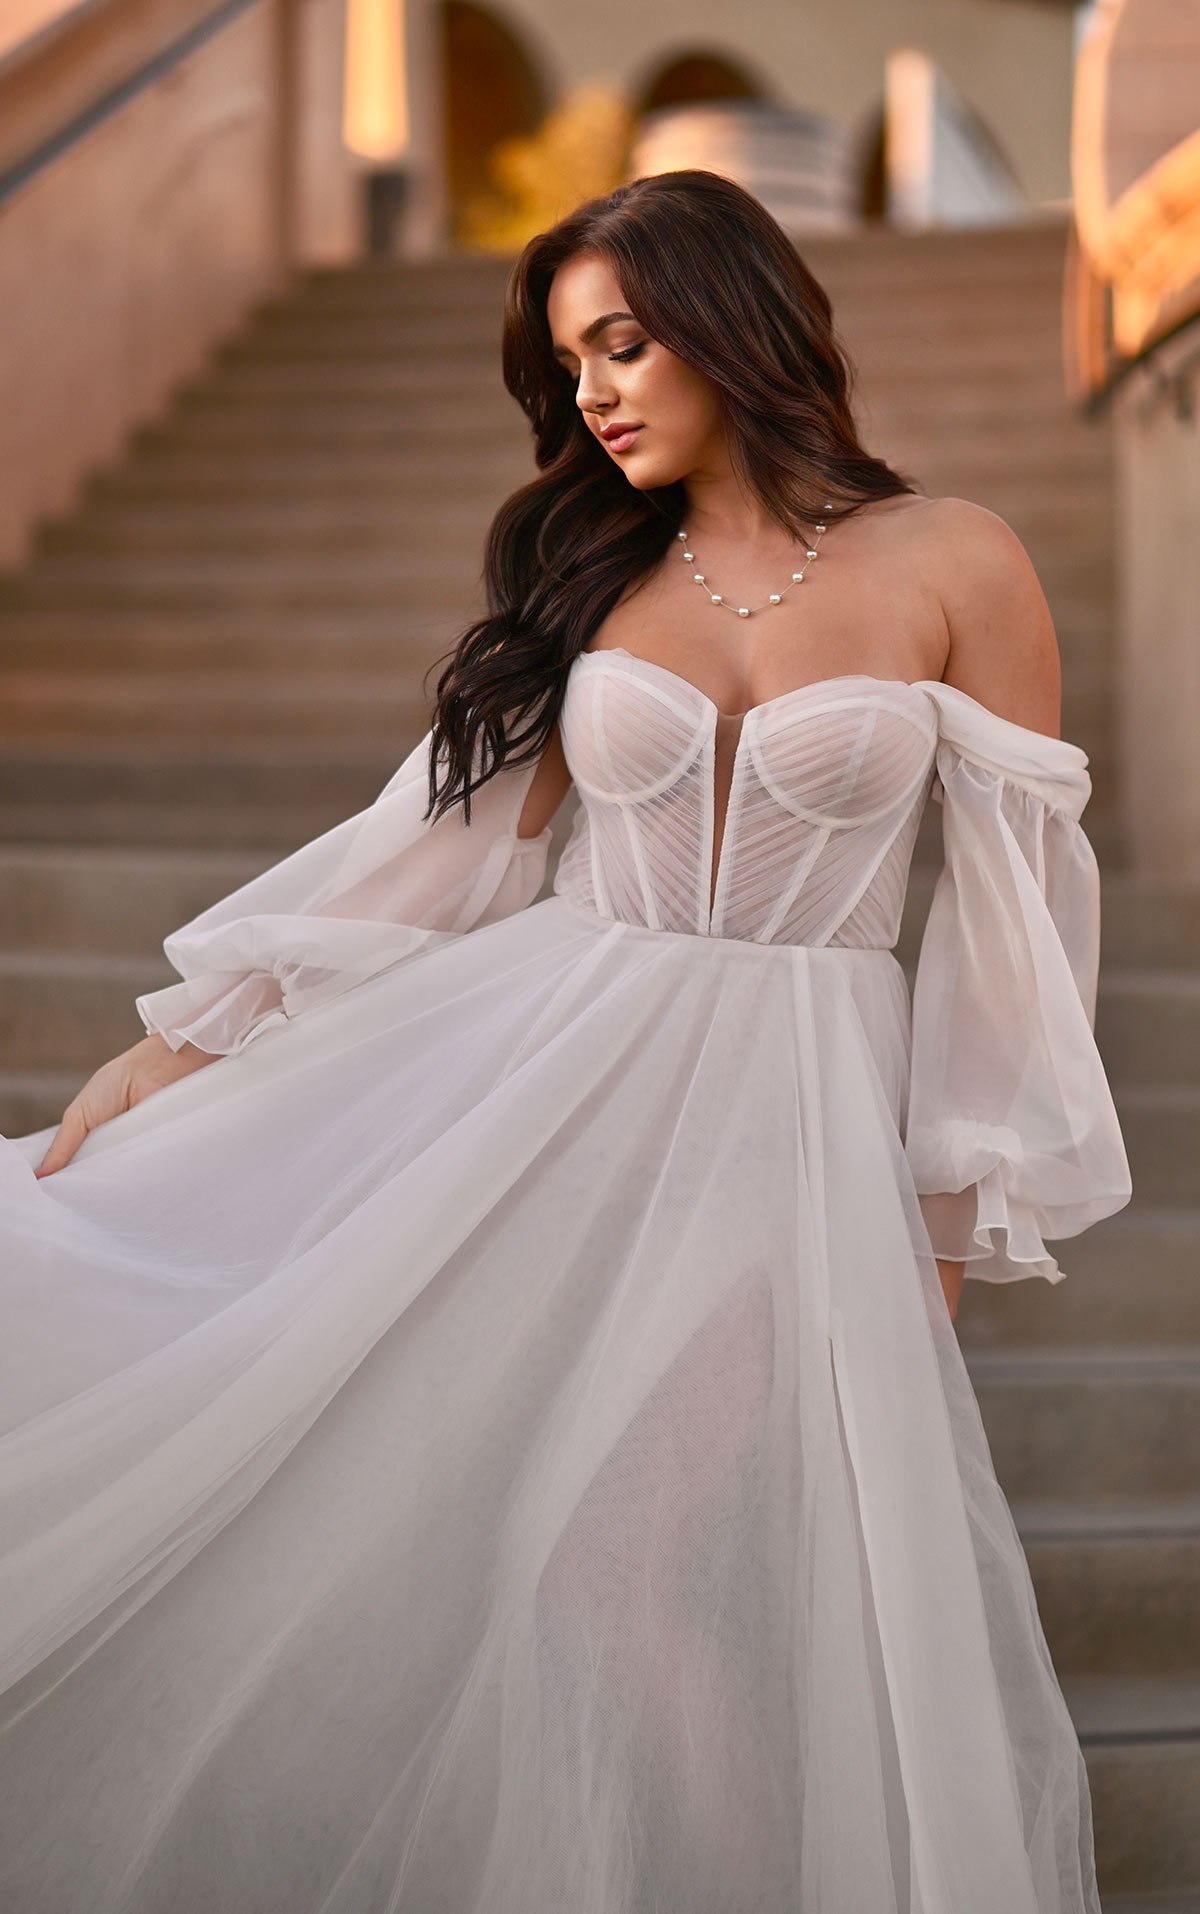 Ashley Graham designing plus-size wedding dresses with Pronovias | Fox News